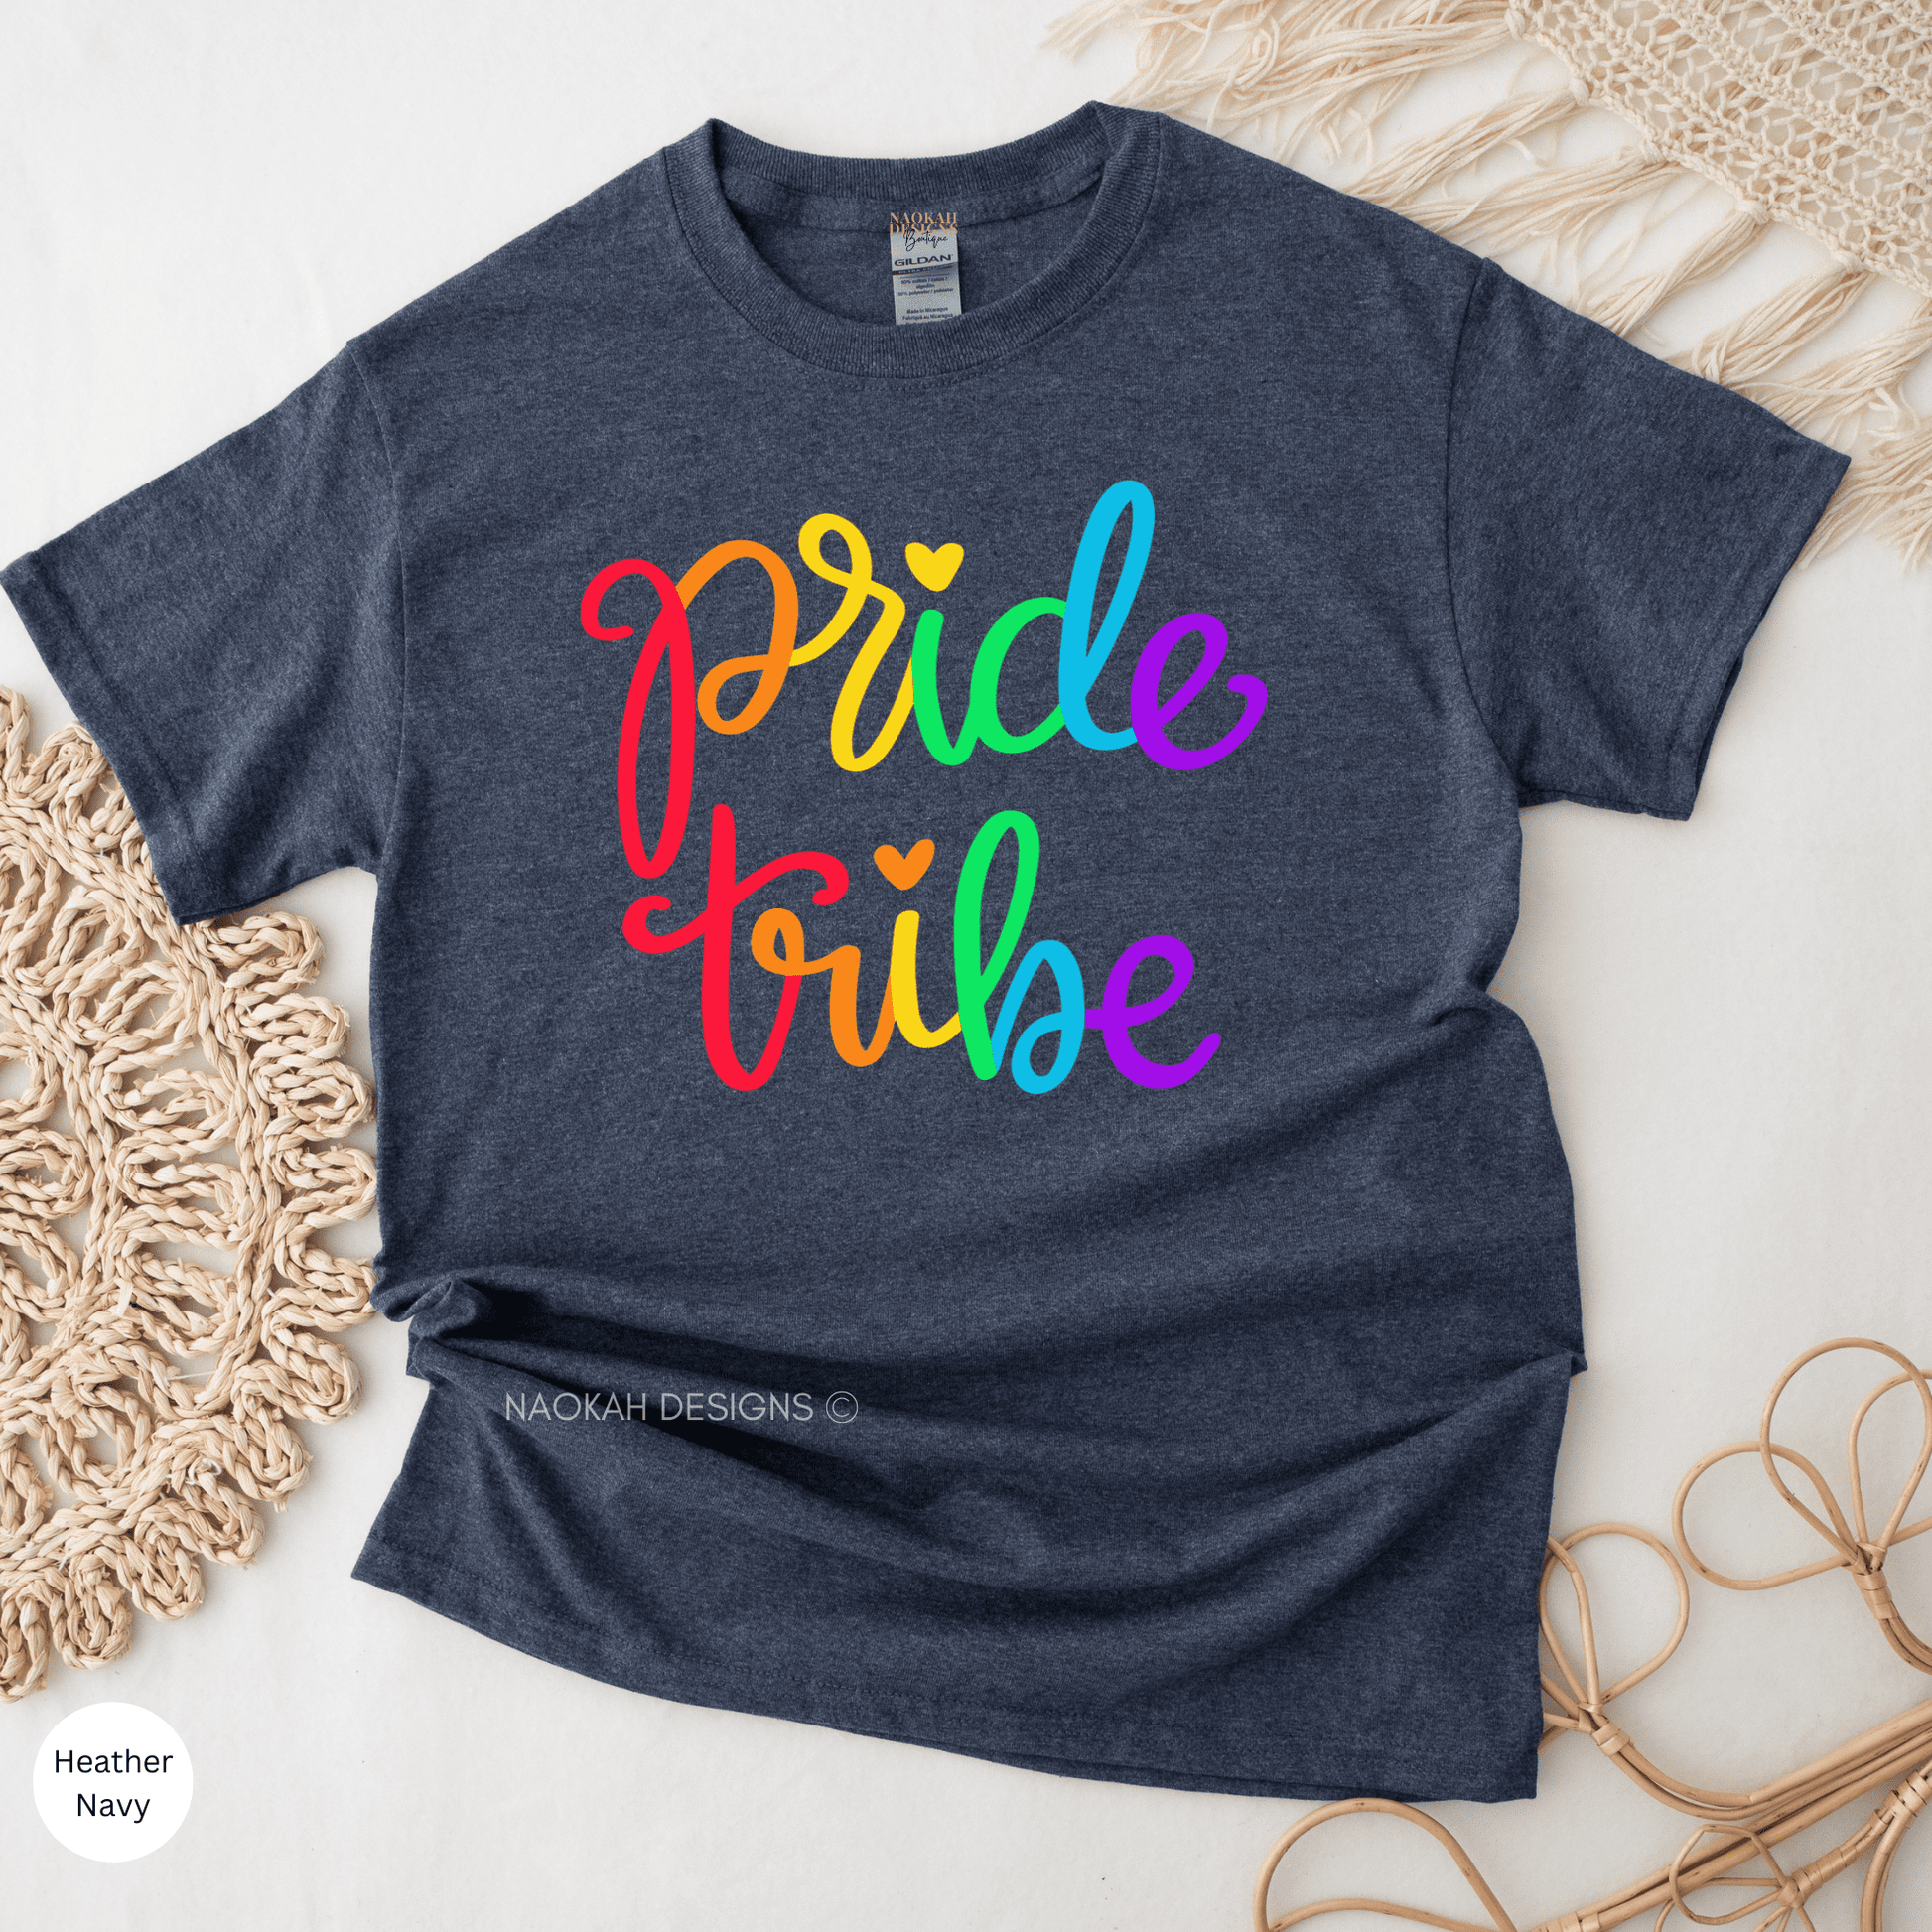 Pride Tribe T-Shirt, Love is Love Shirt, LGBTQ Graphic Tee, Equality Gift, Gay Rights Shirt, Love Wins Shirt, Lesbian Shirt, Ally TShirt, two spirit shirt